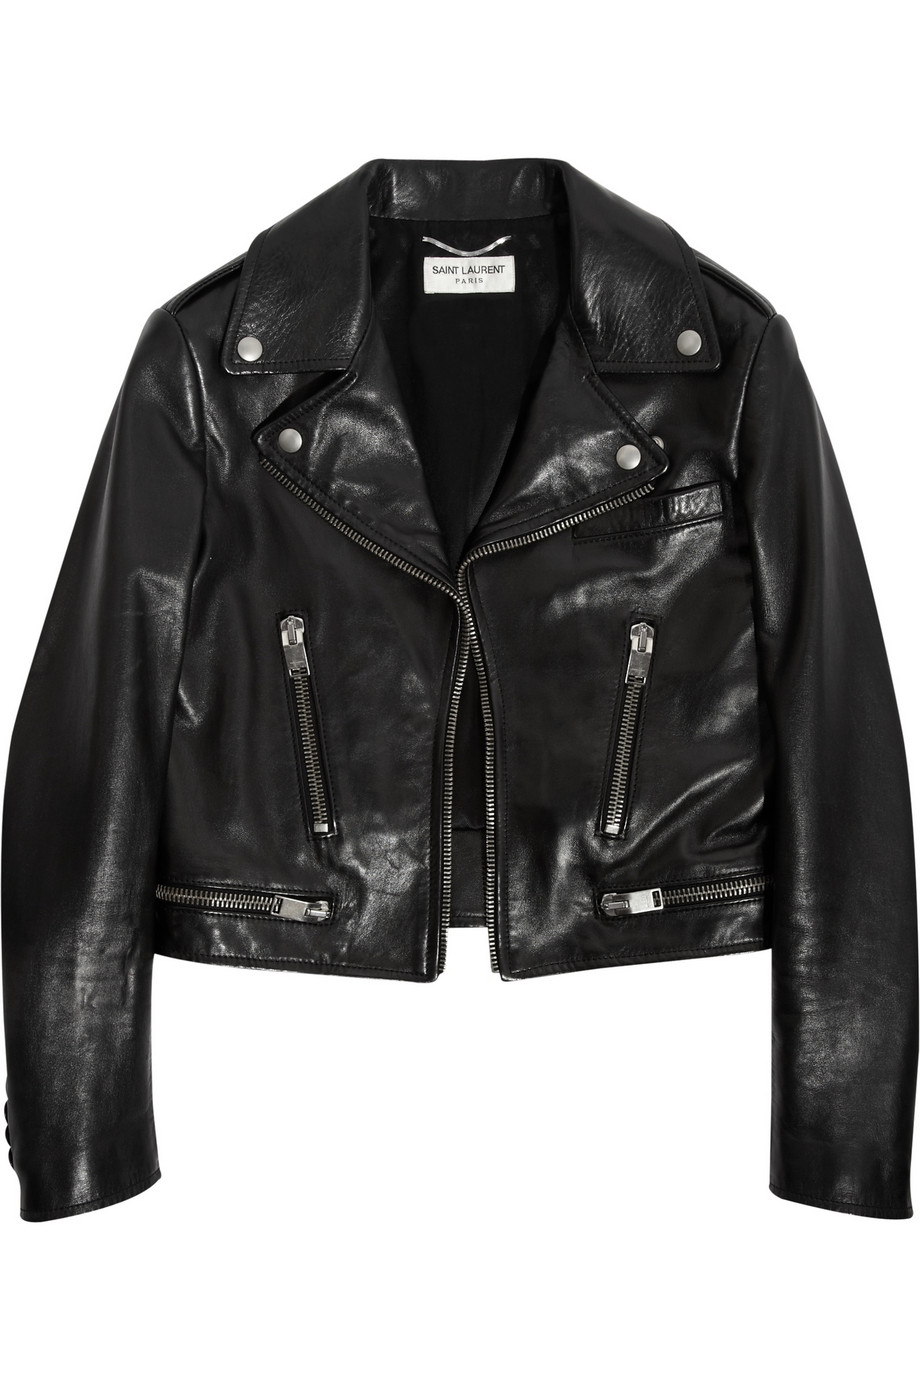 Saint Laurent Leather Biker Jacket in Black | Lyst